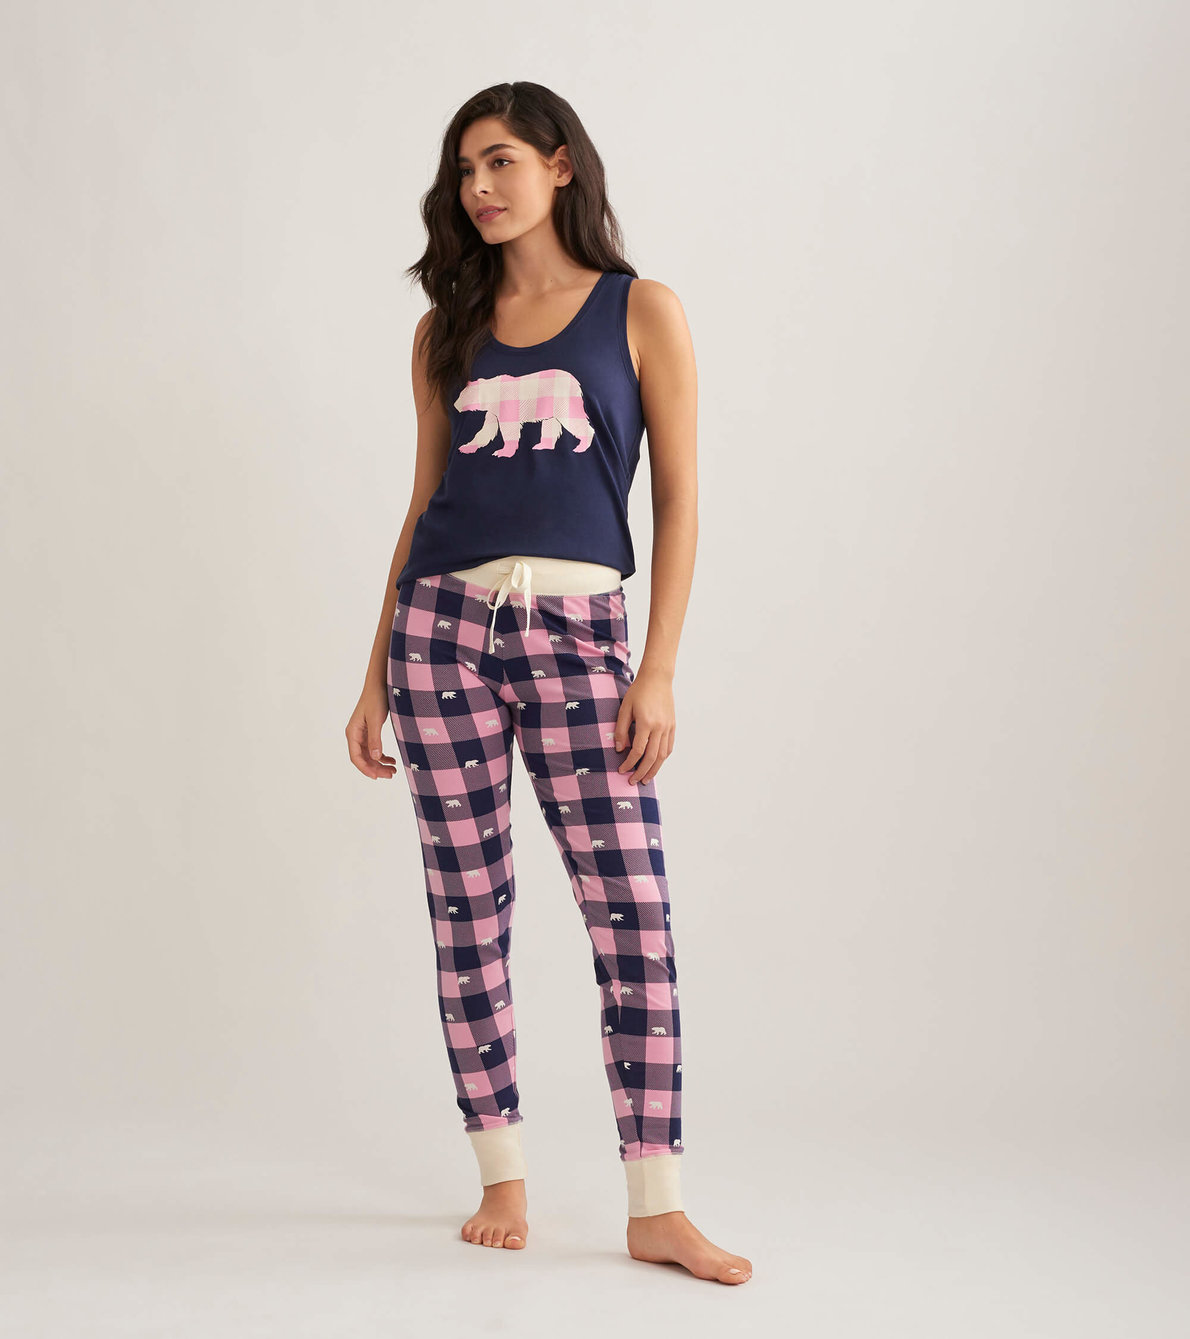 View larger image of Mama Bear Women's Tank and Leggings Pajama Separates